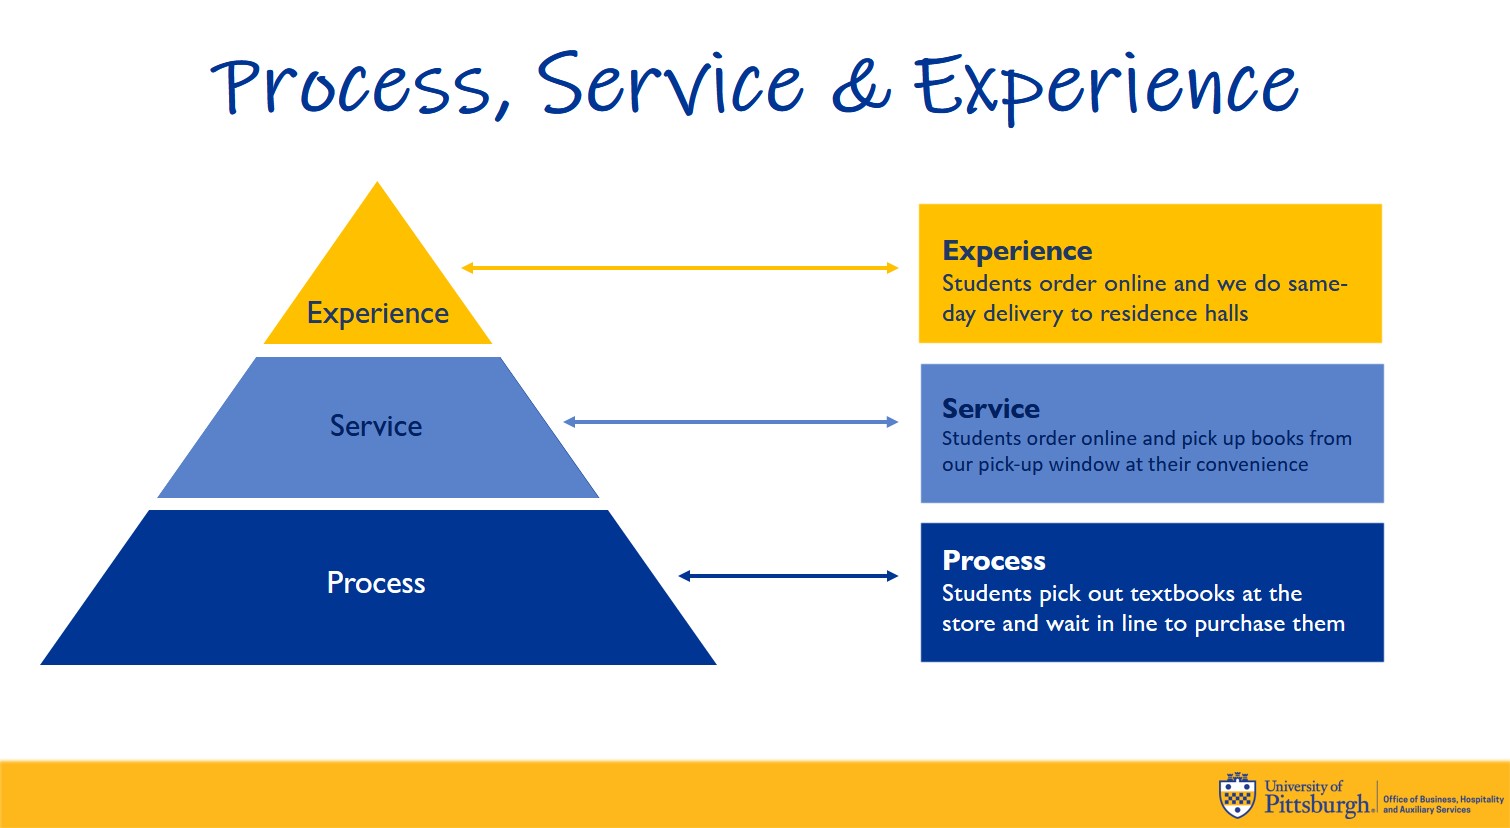 Scott McKain's service pyramid